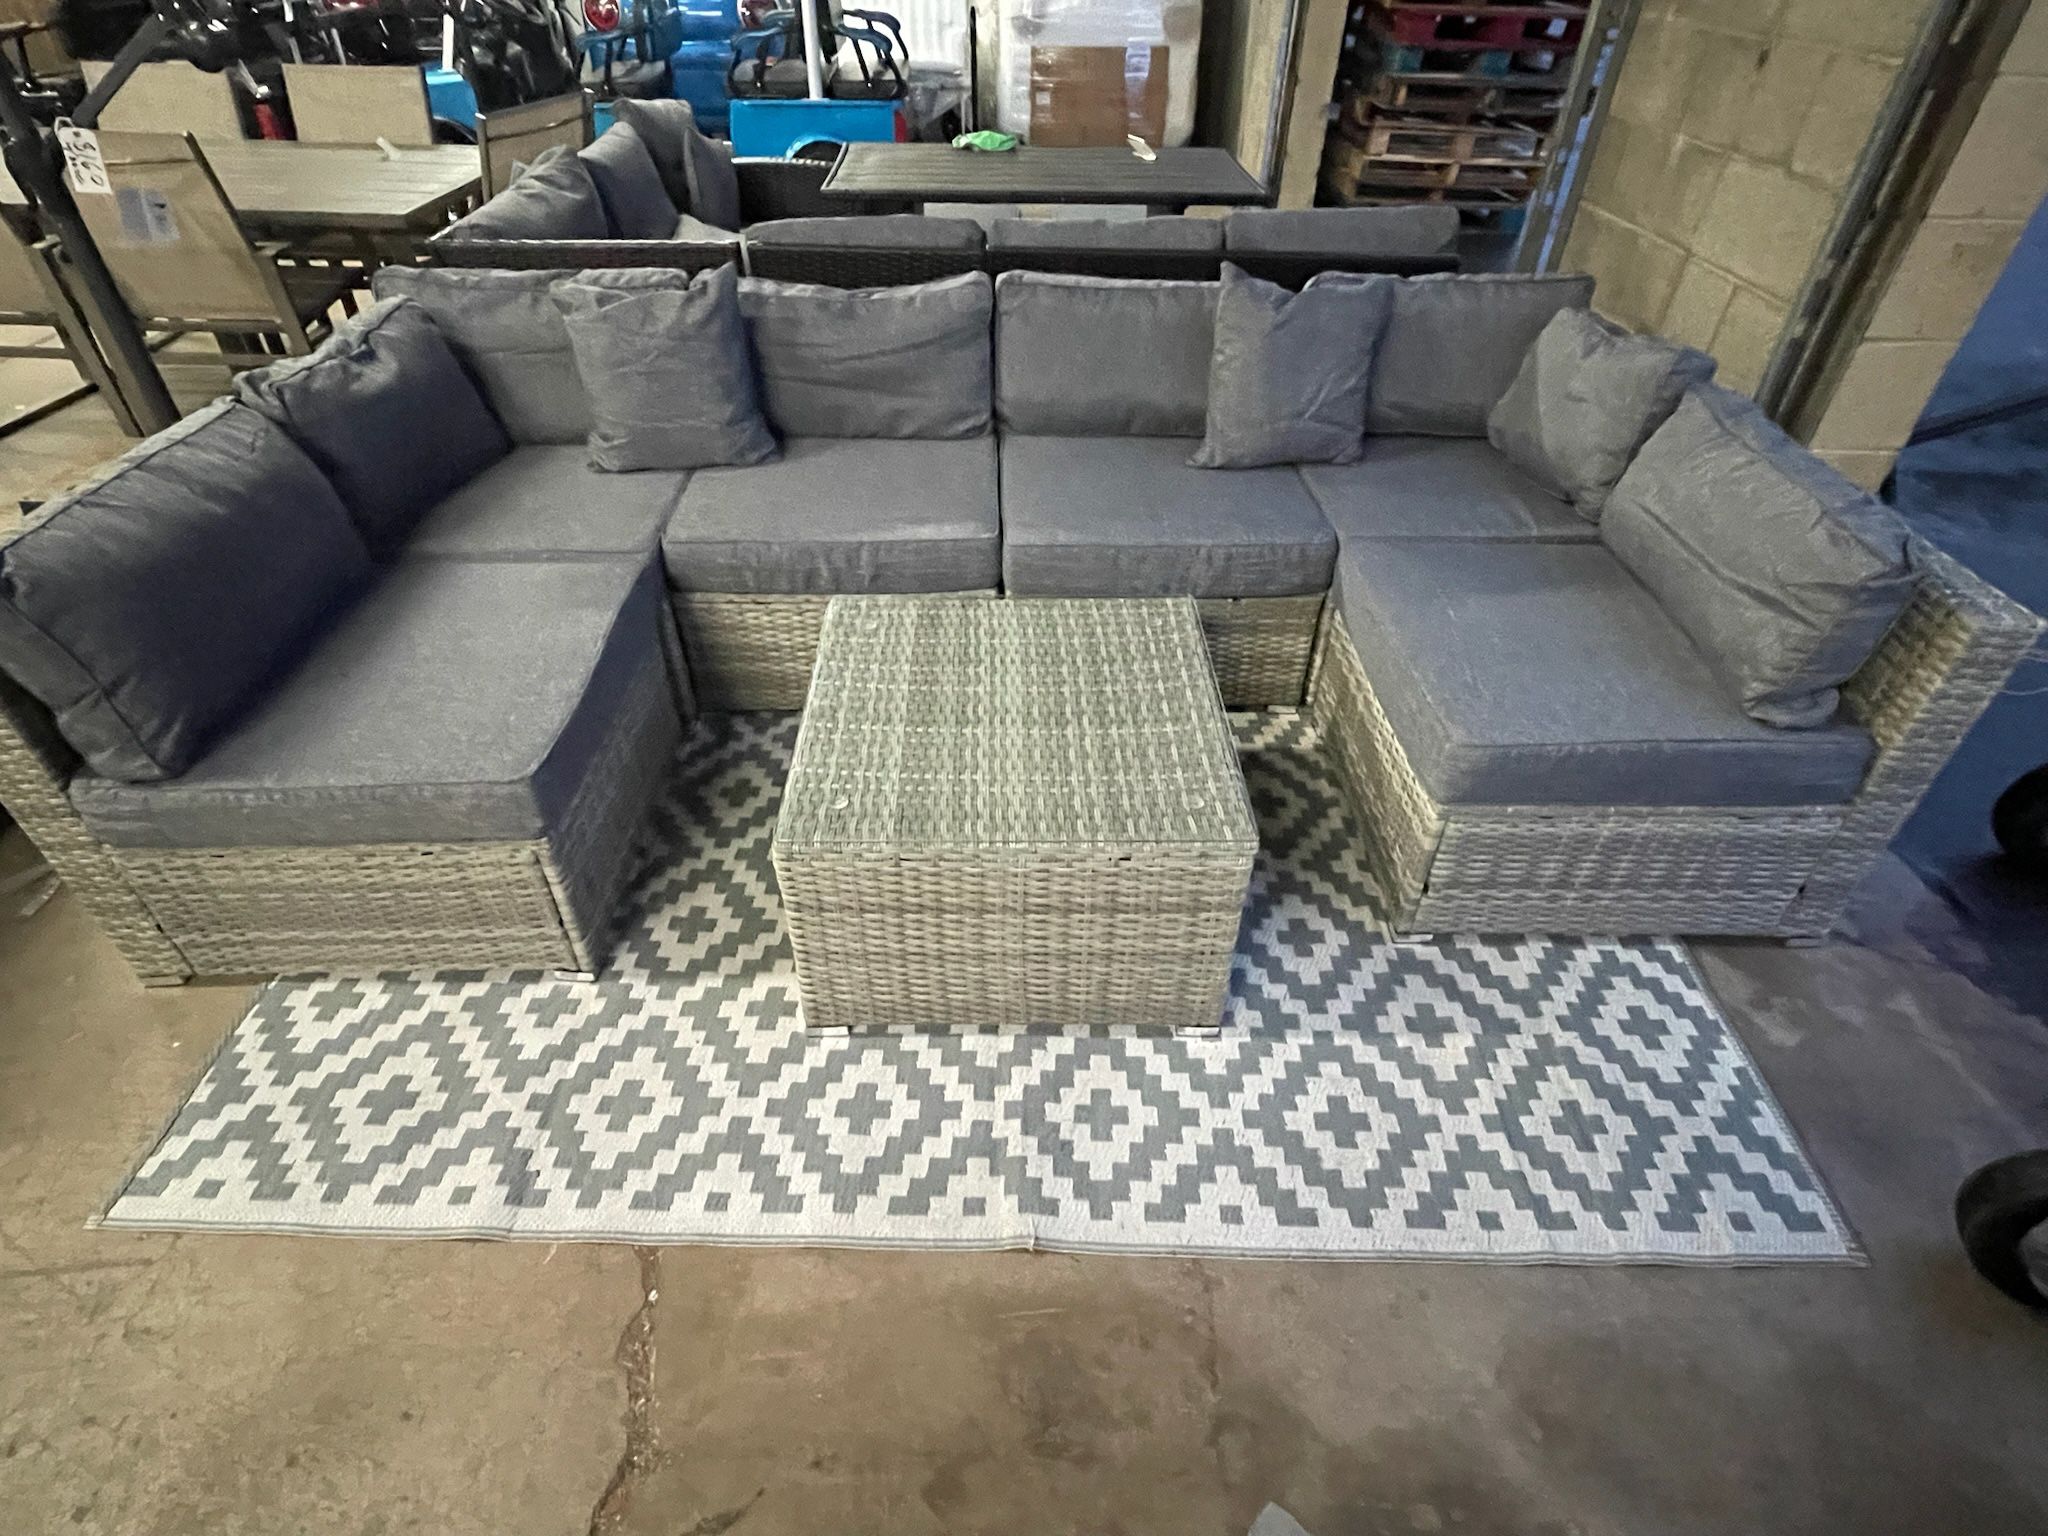 7 Piece Modular Outdoor Patio Furniture Set *New In Box*